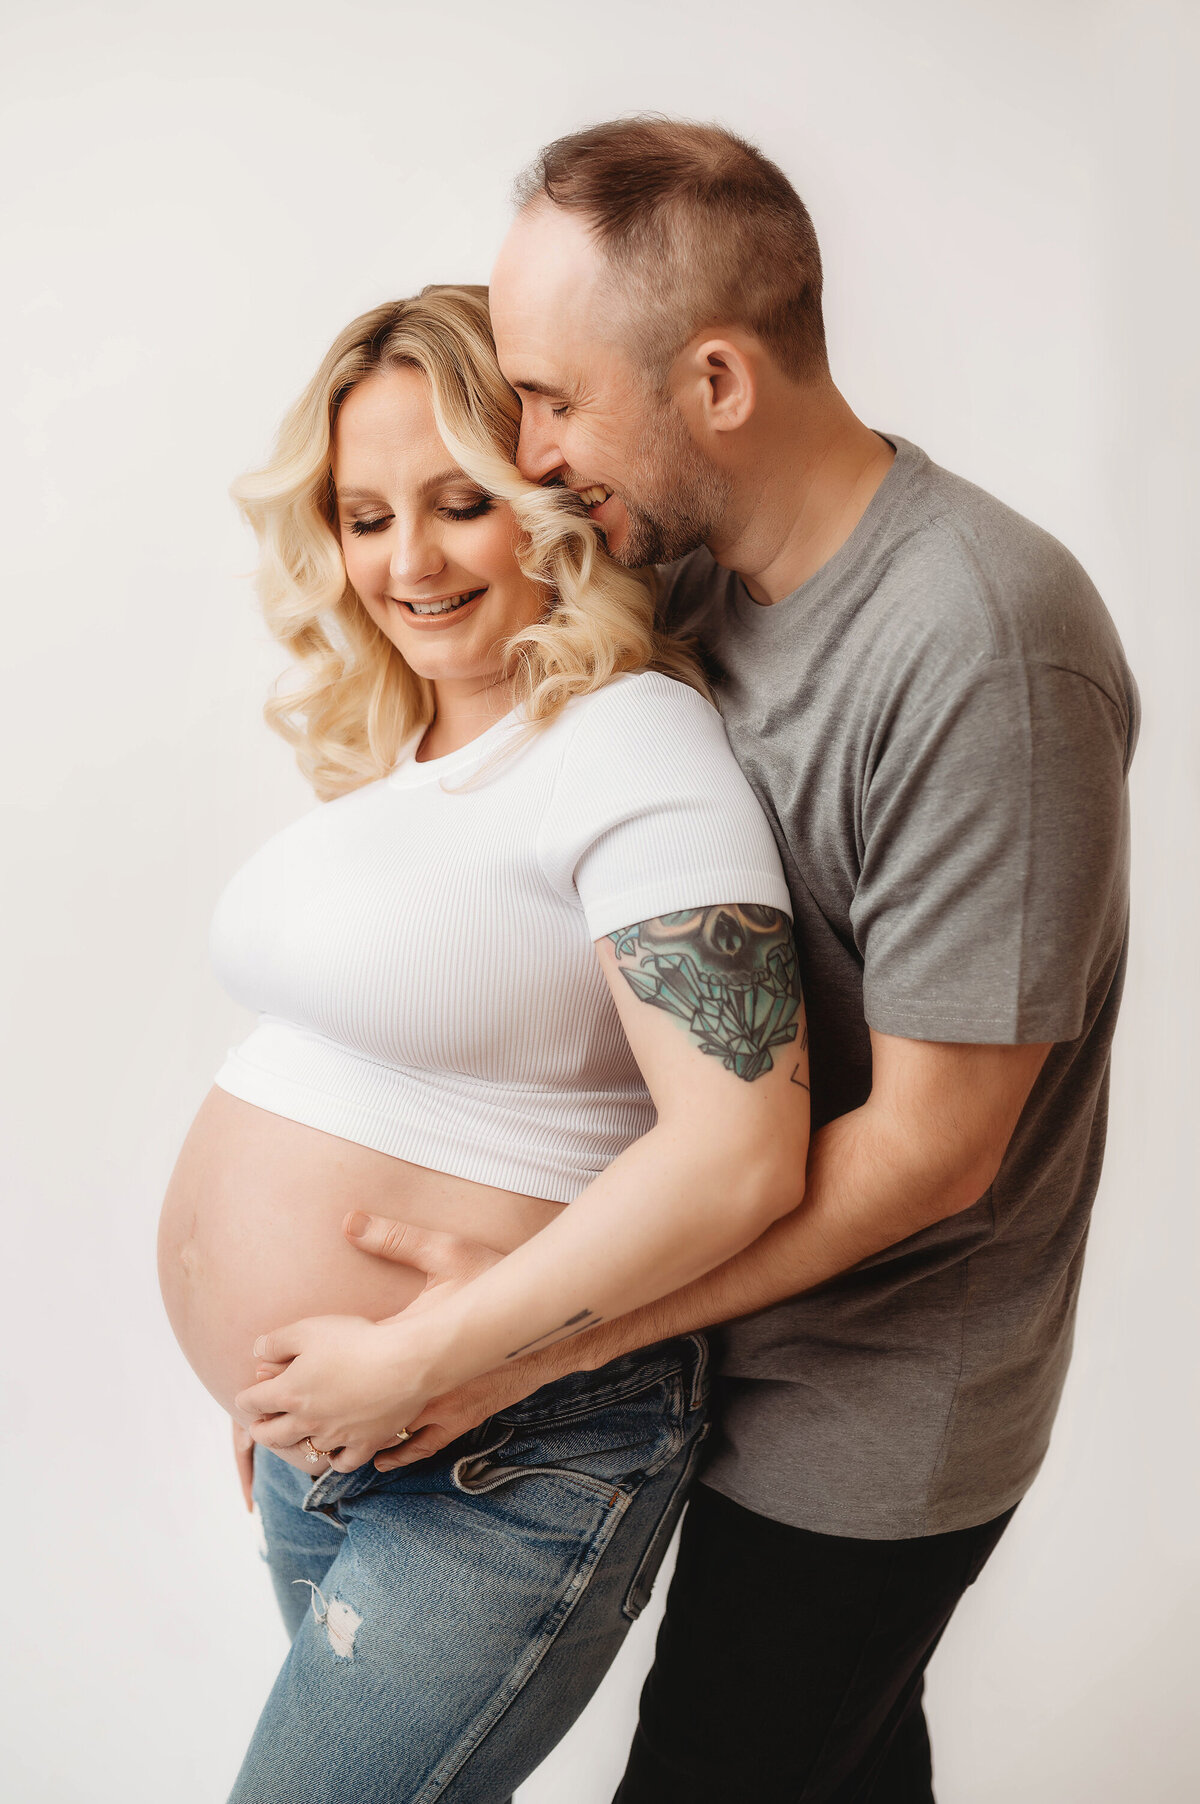 Expectant Parents pose for Studio Maternity Photos in Asheville, NC Maternity Portrait Studio.